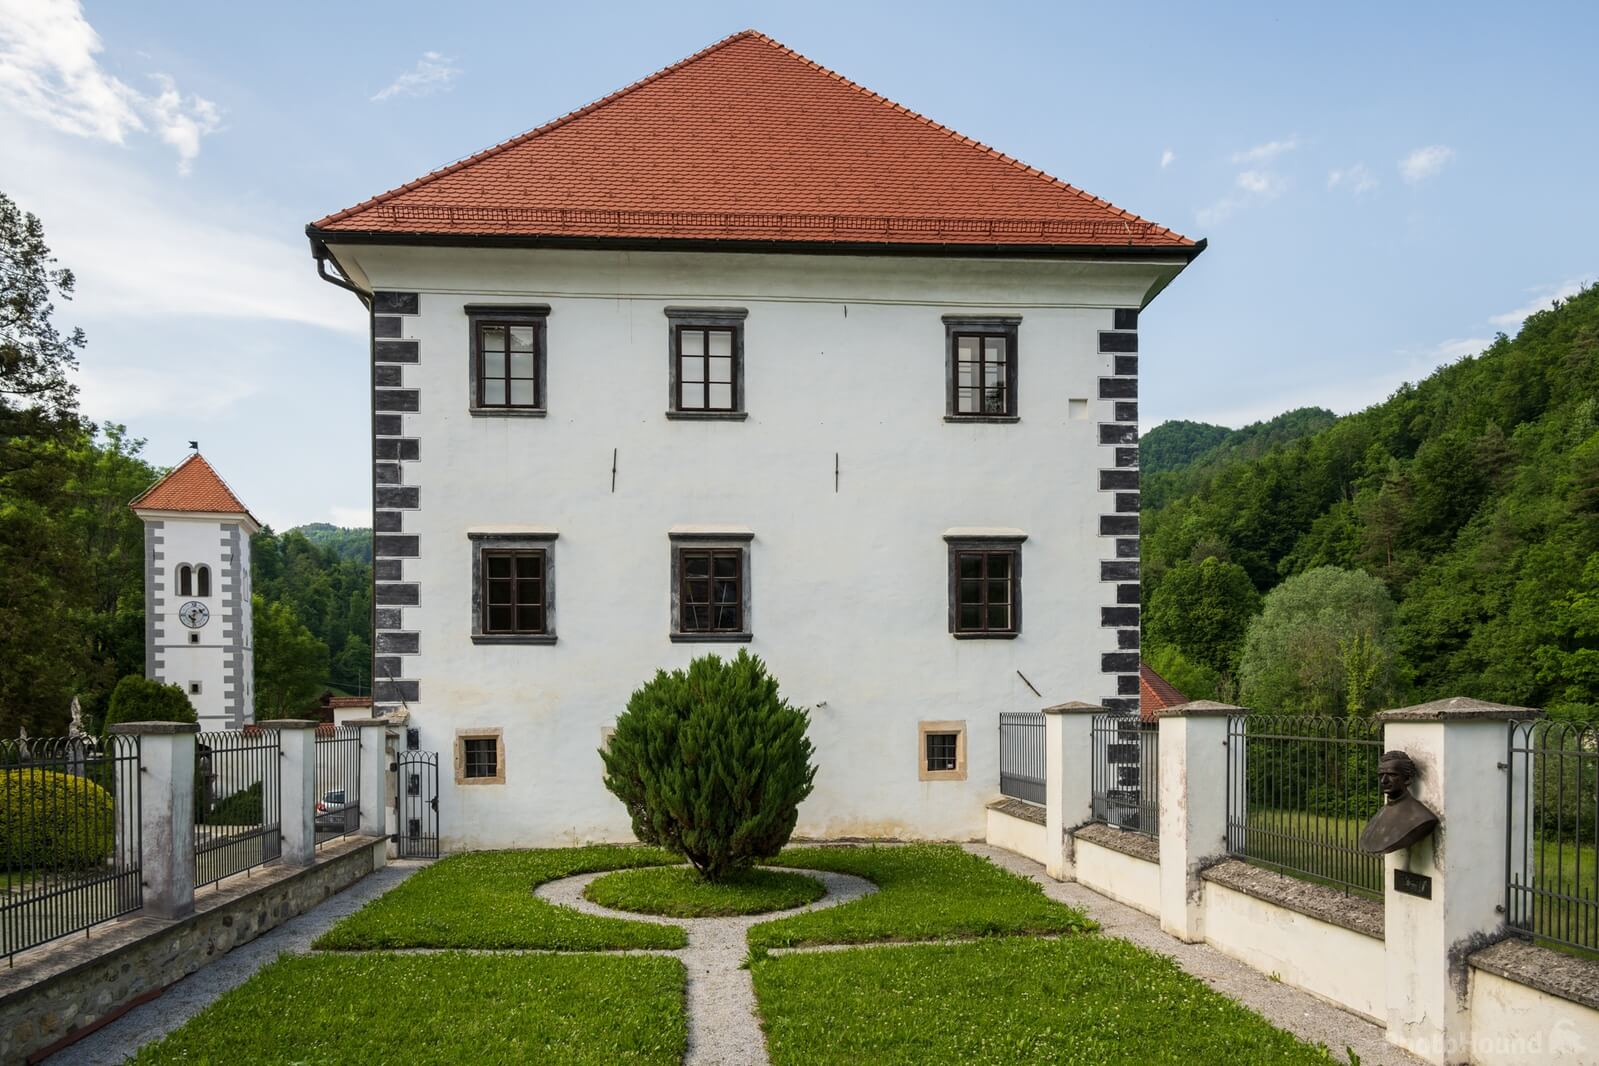 Image of Polhov Gradec Mansion (Polhograjska graščina) by Luka Esenko